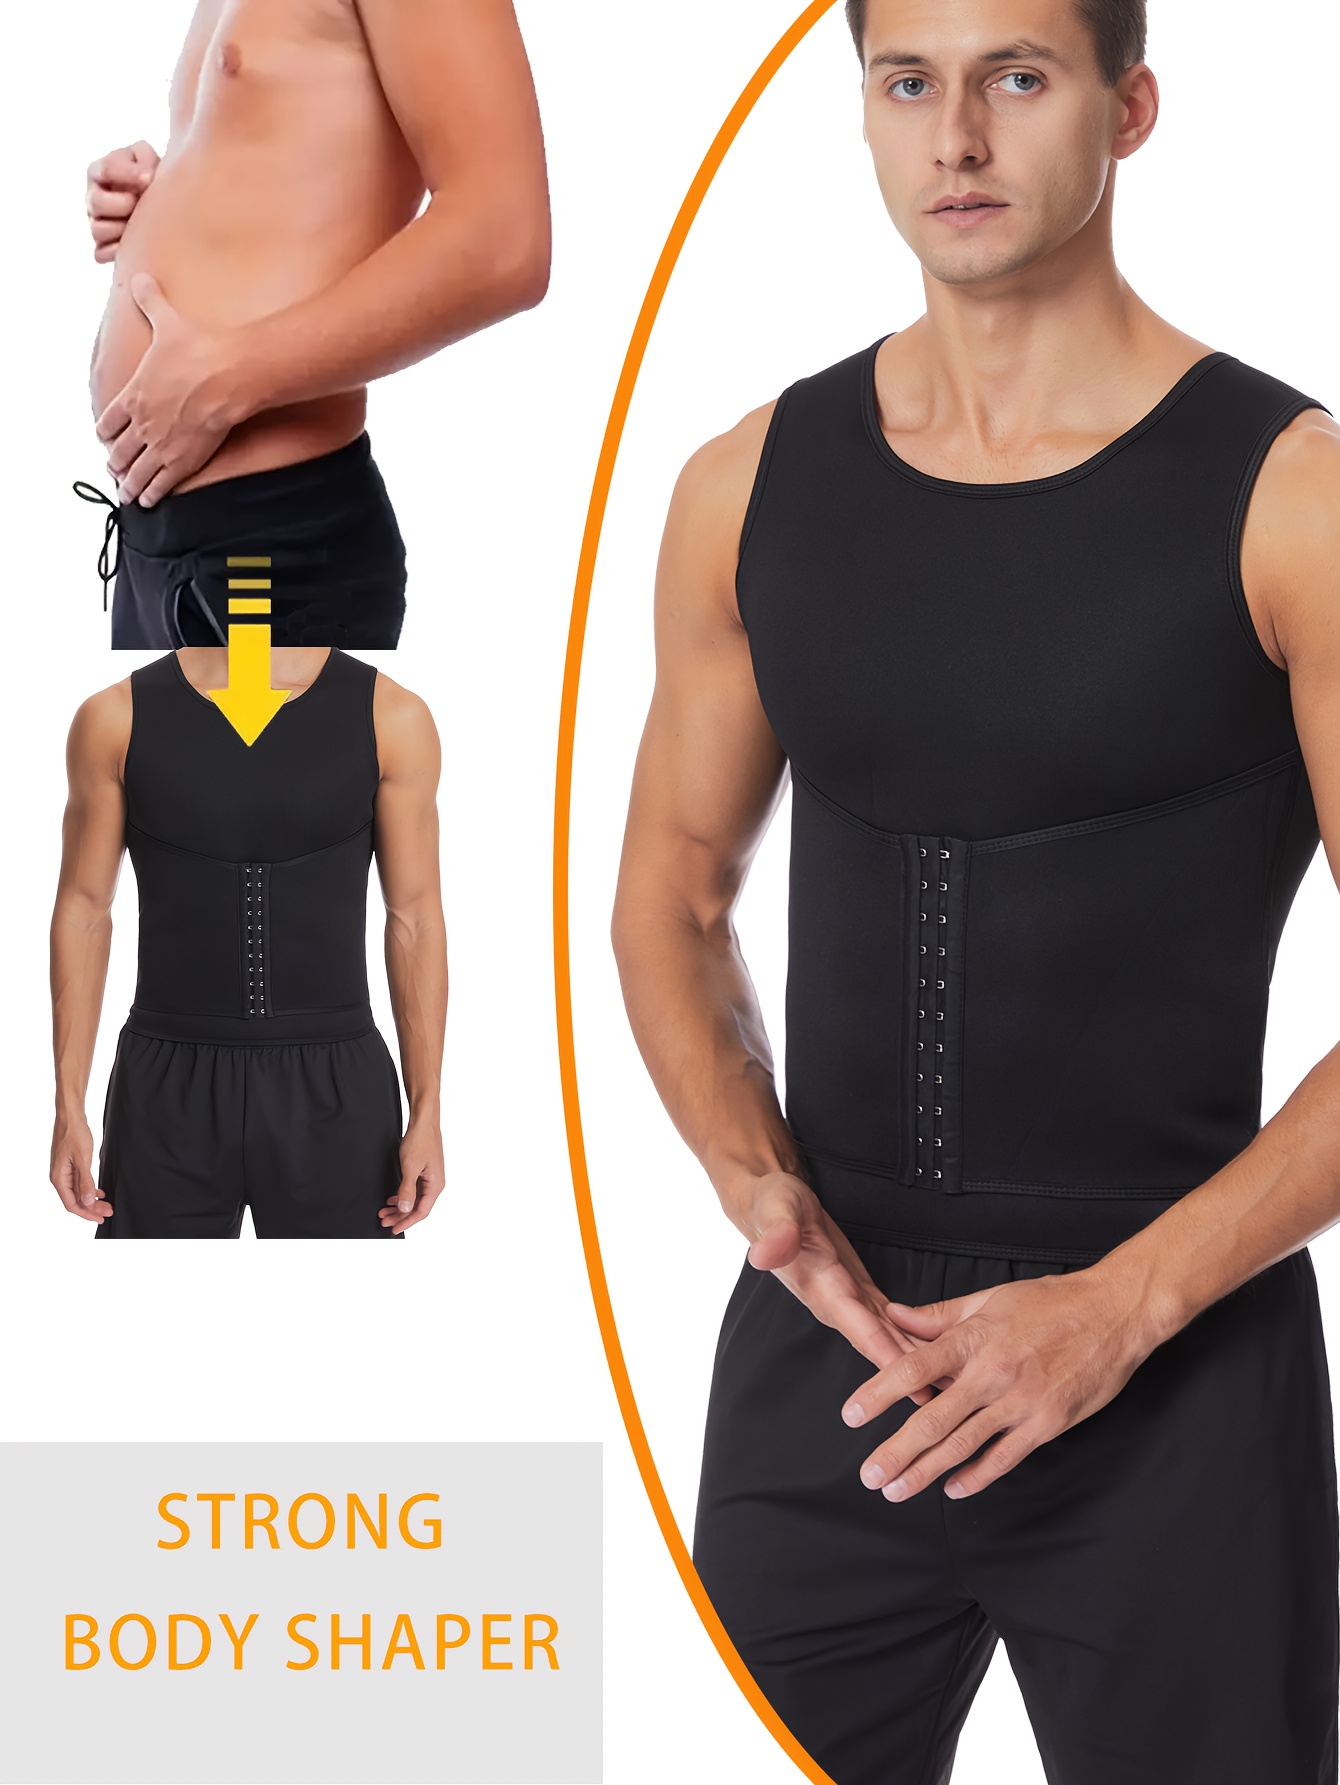 Tight Waist Trainer Vest For Men, Workout Compression Shirt Underwear -  Body Slimming Shapewear Tops Undershirts